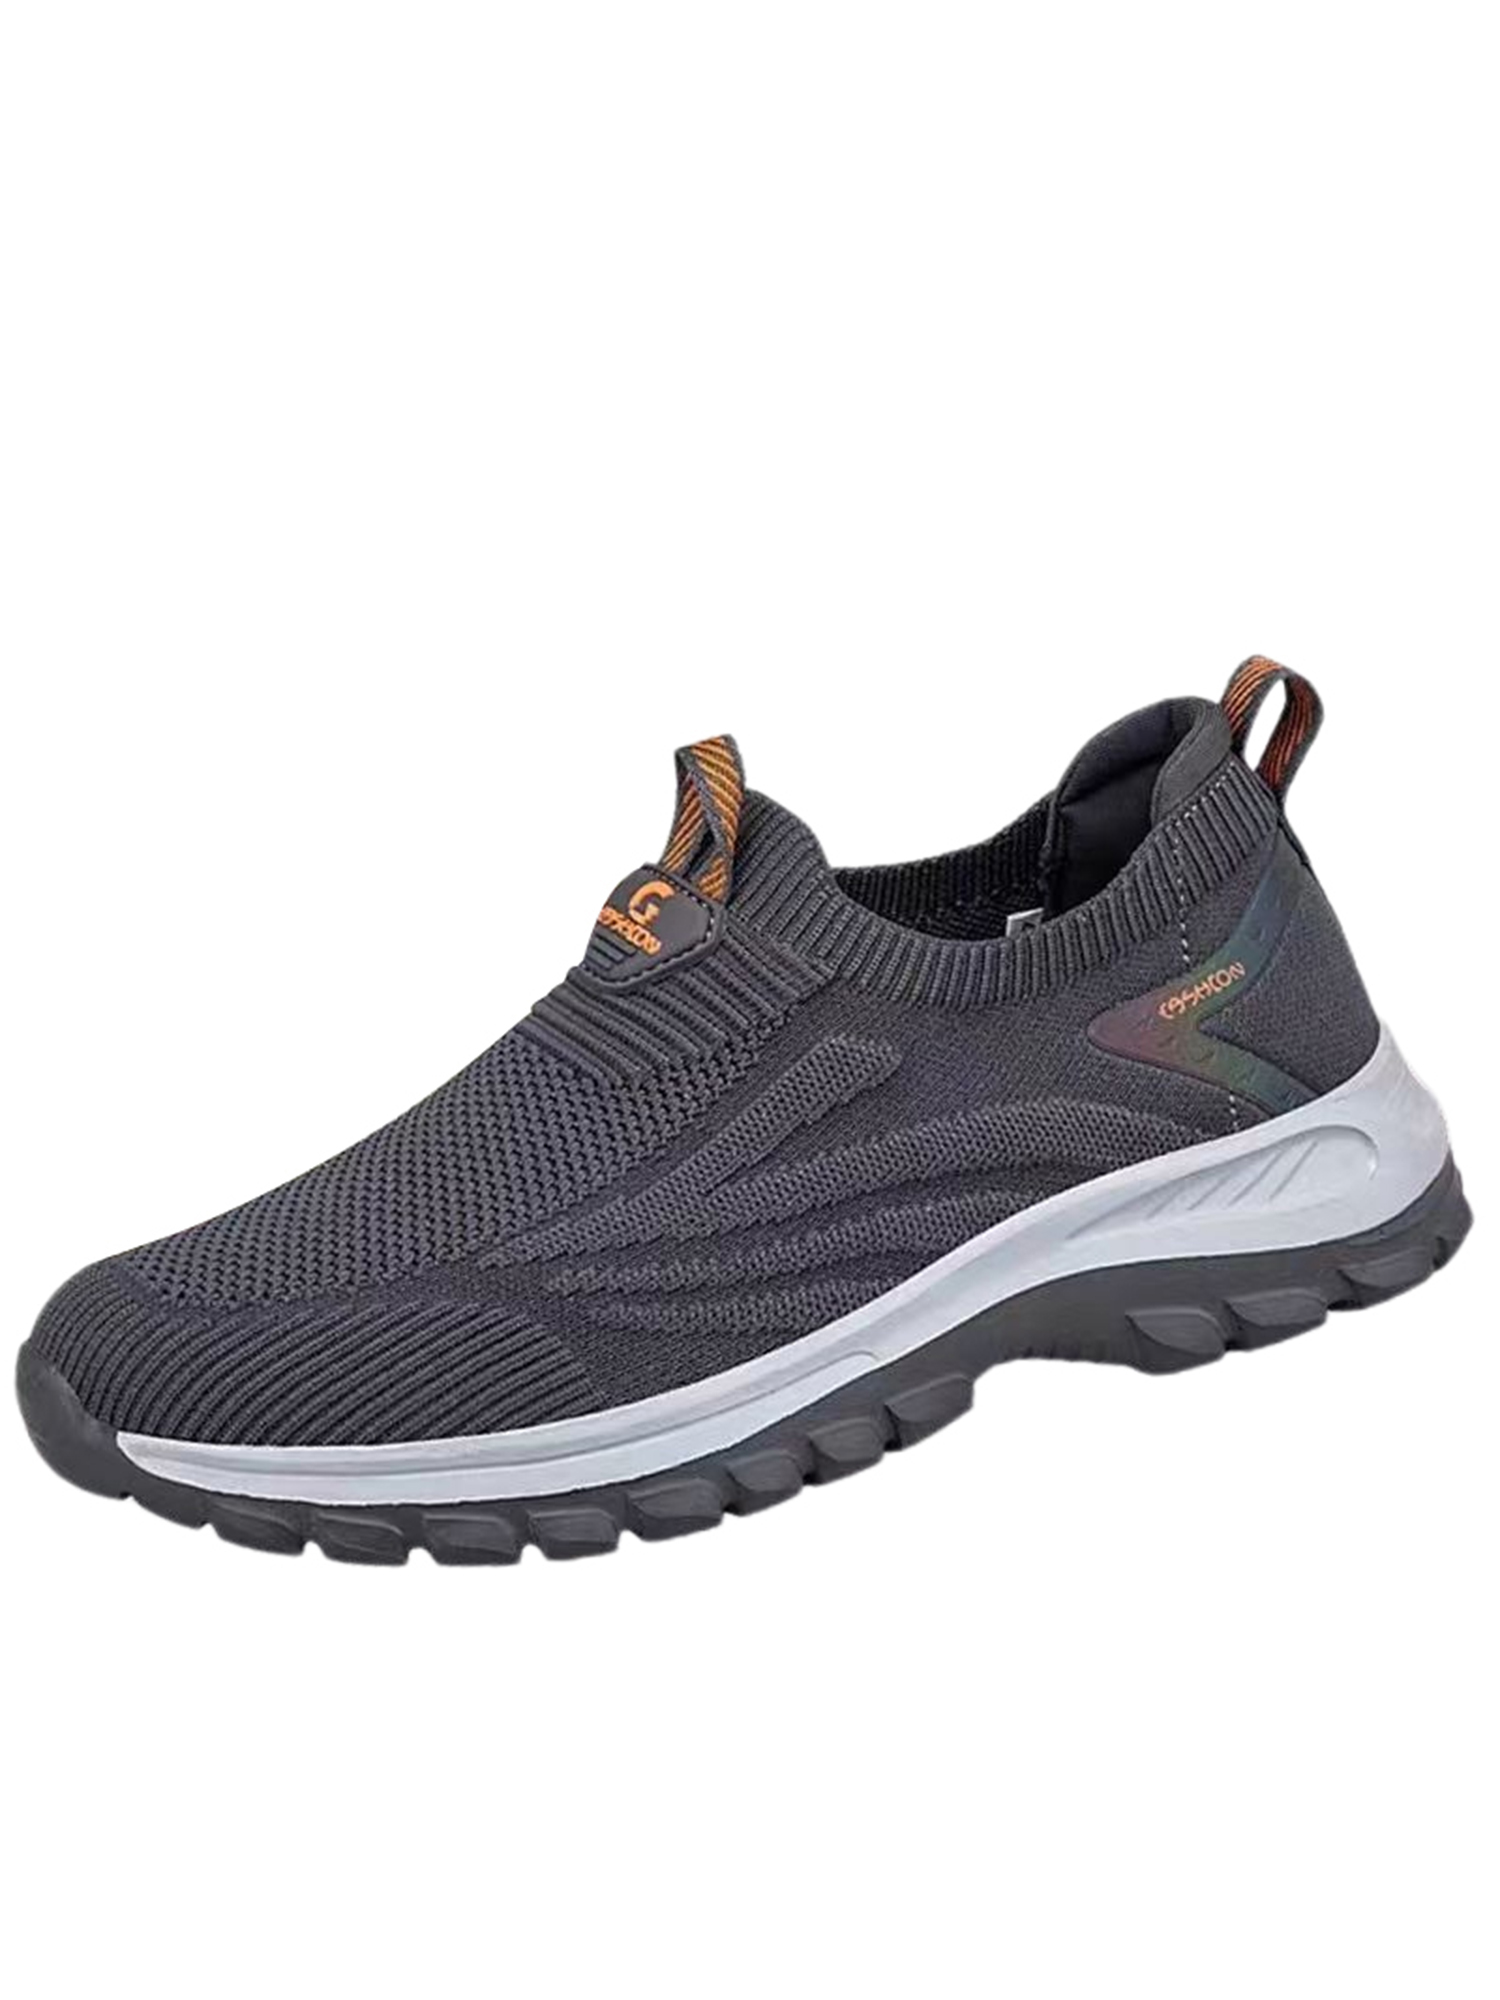 UKAP Unisex Running Shoe Slip On Sneakers Mesh Athletic Shoes ...